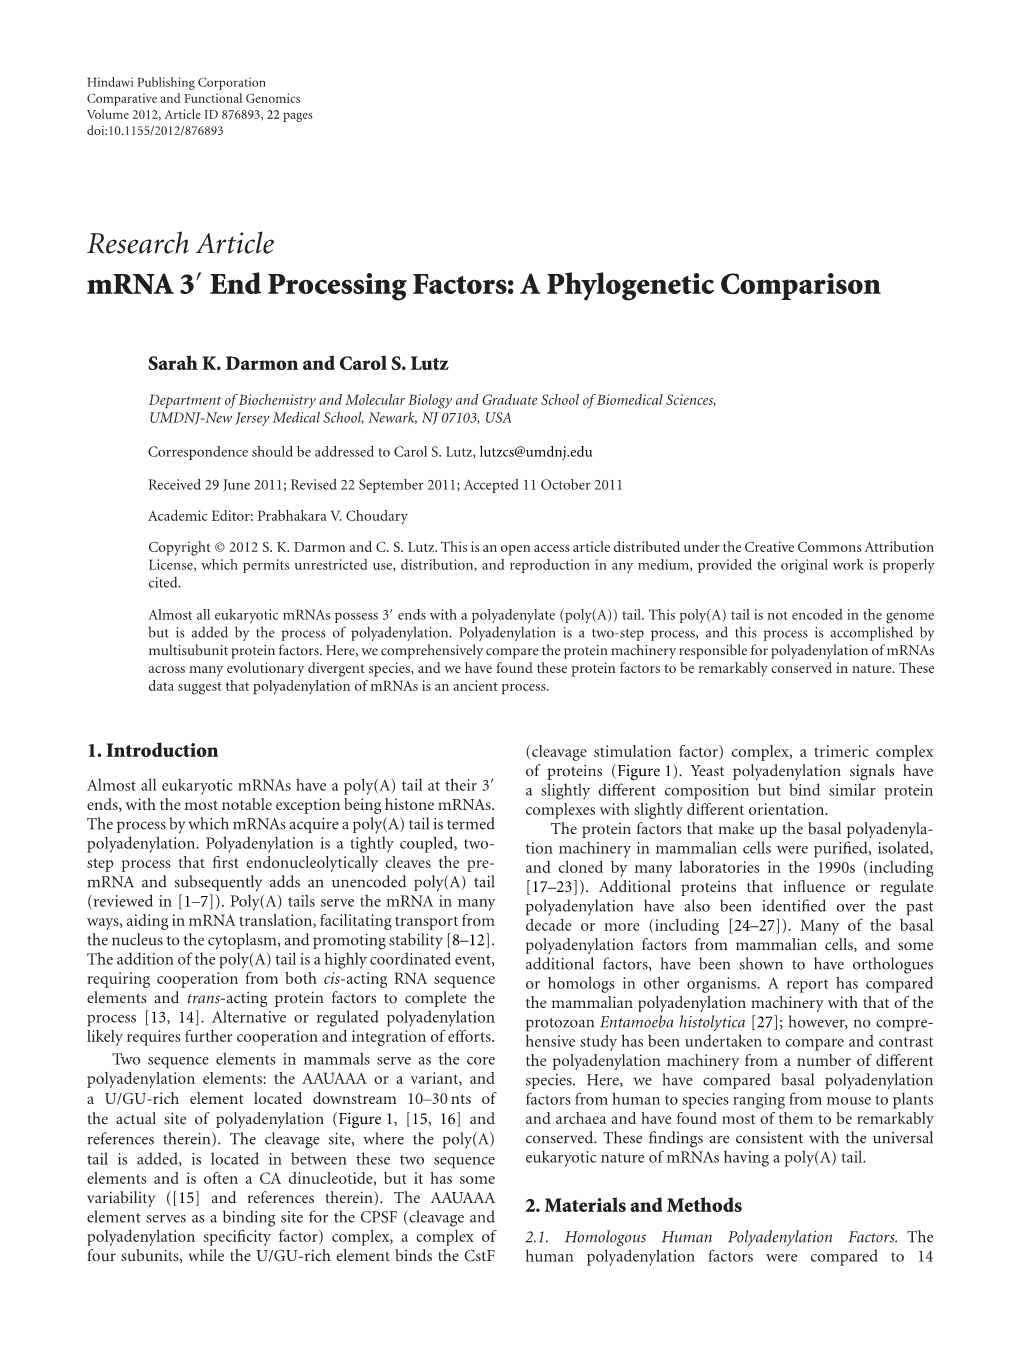 Mrna 3 End Processing Factors: a Phylogenetic Comparison